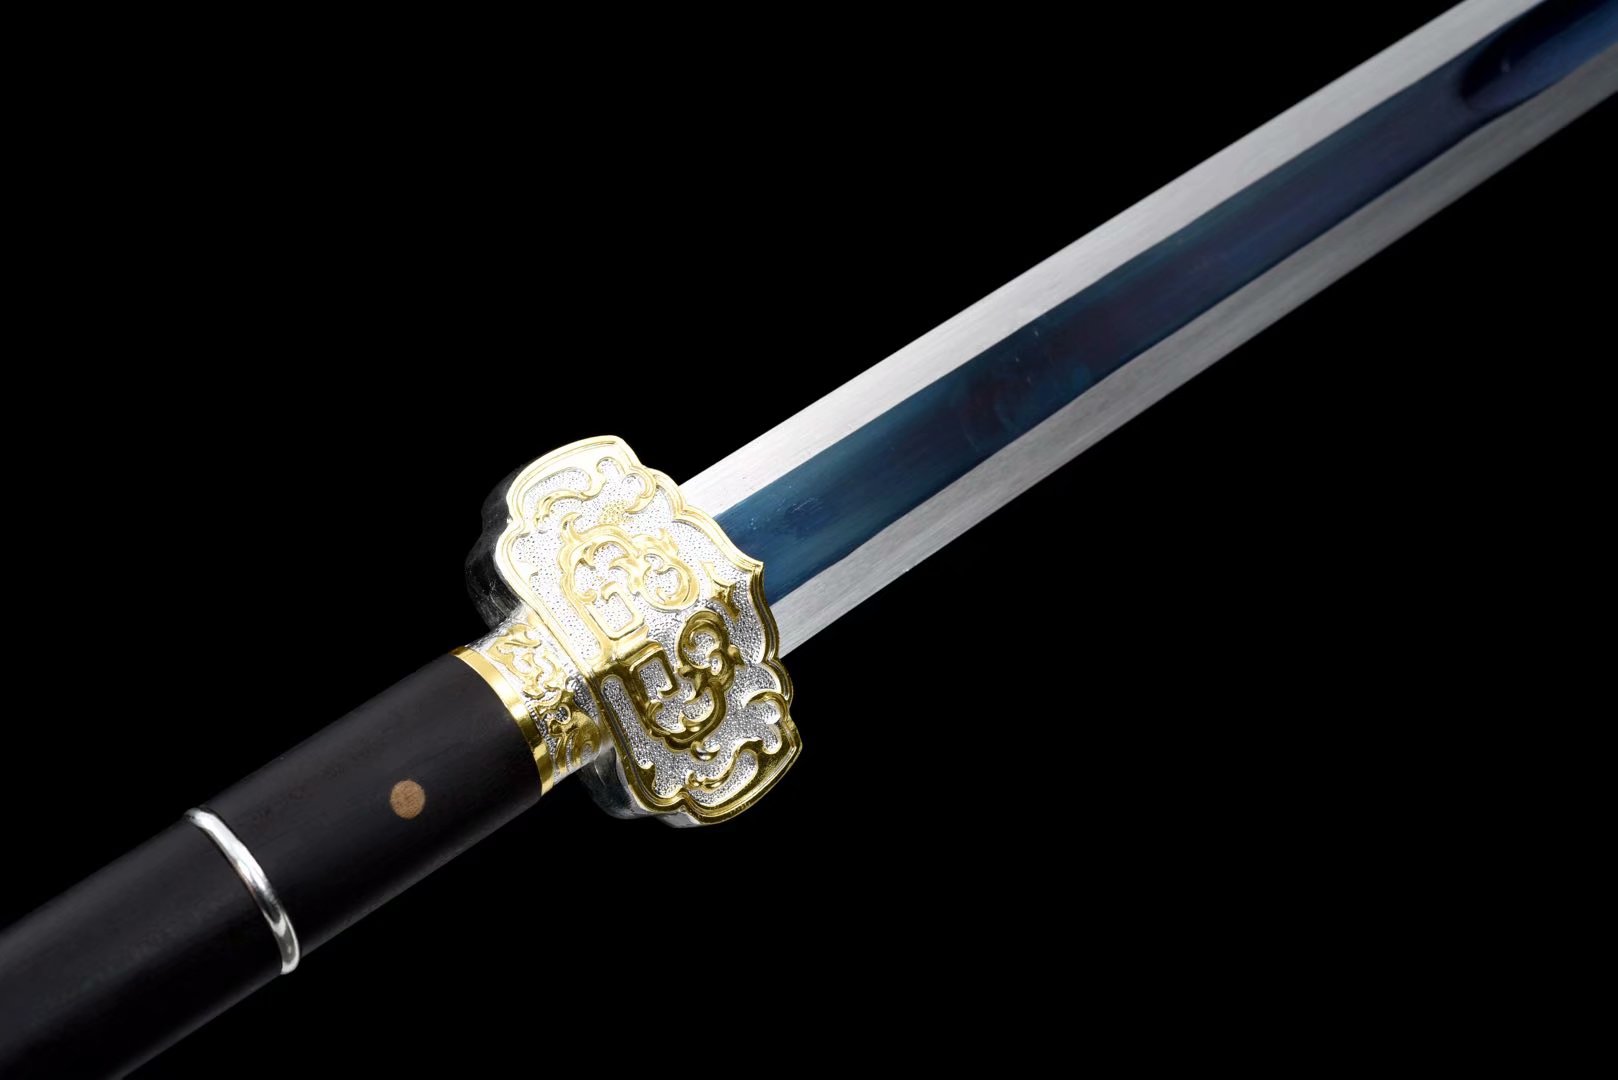 Ruyi jian sword,Forged High carbon steel bule blade,Alloy fittings